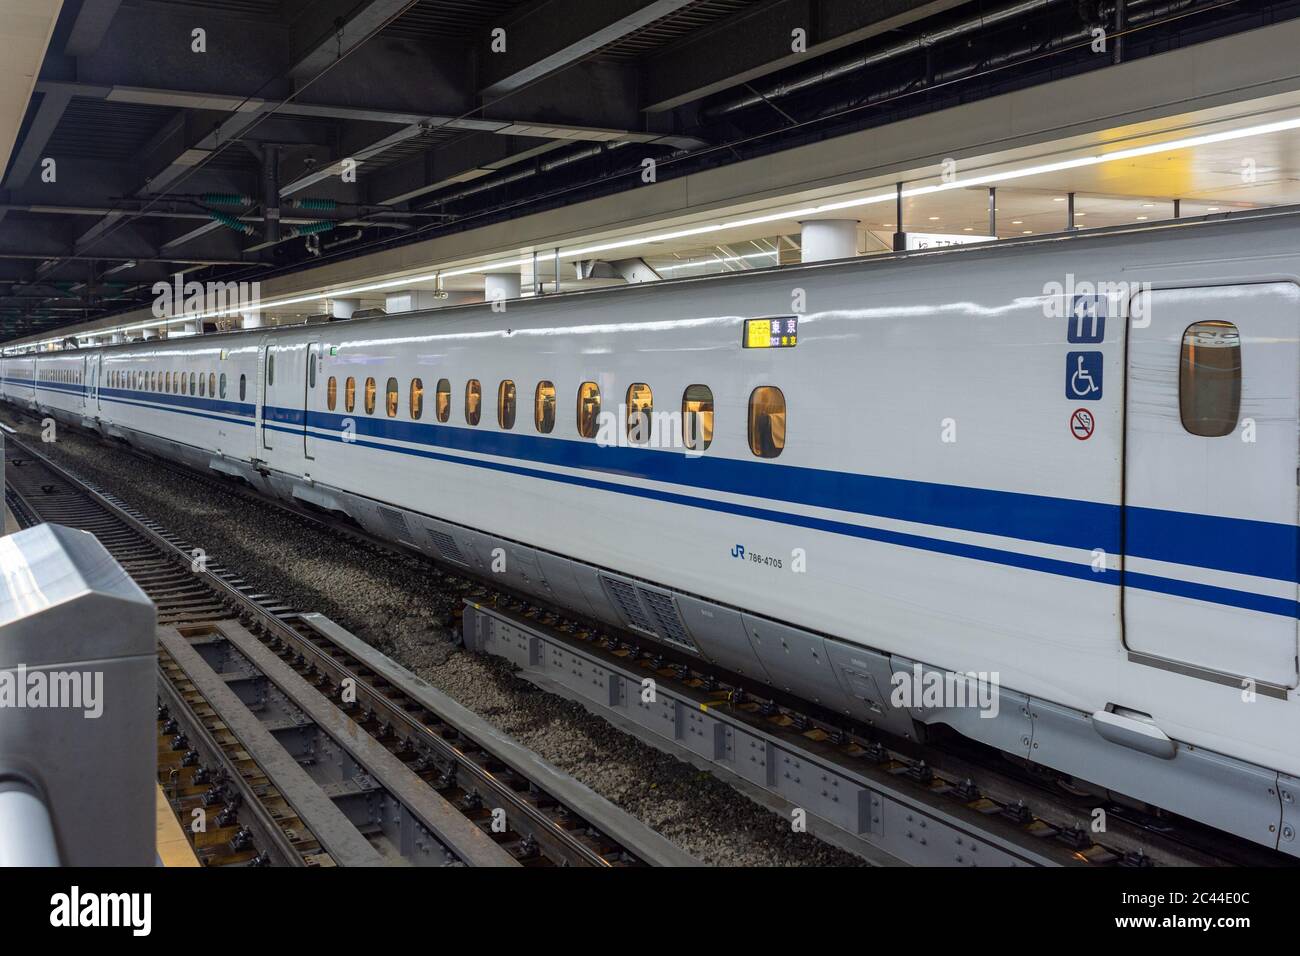 Tokyo / Japan - October 22, 2017: N700 Series Shinkansen high-speed bullet train of Japan Railway Company (JR) at Tokyo Station in Tokyo, Japan Stock Photo